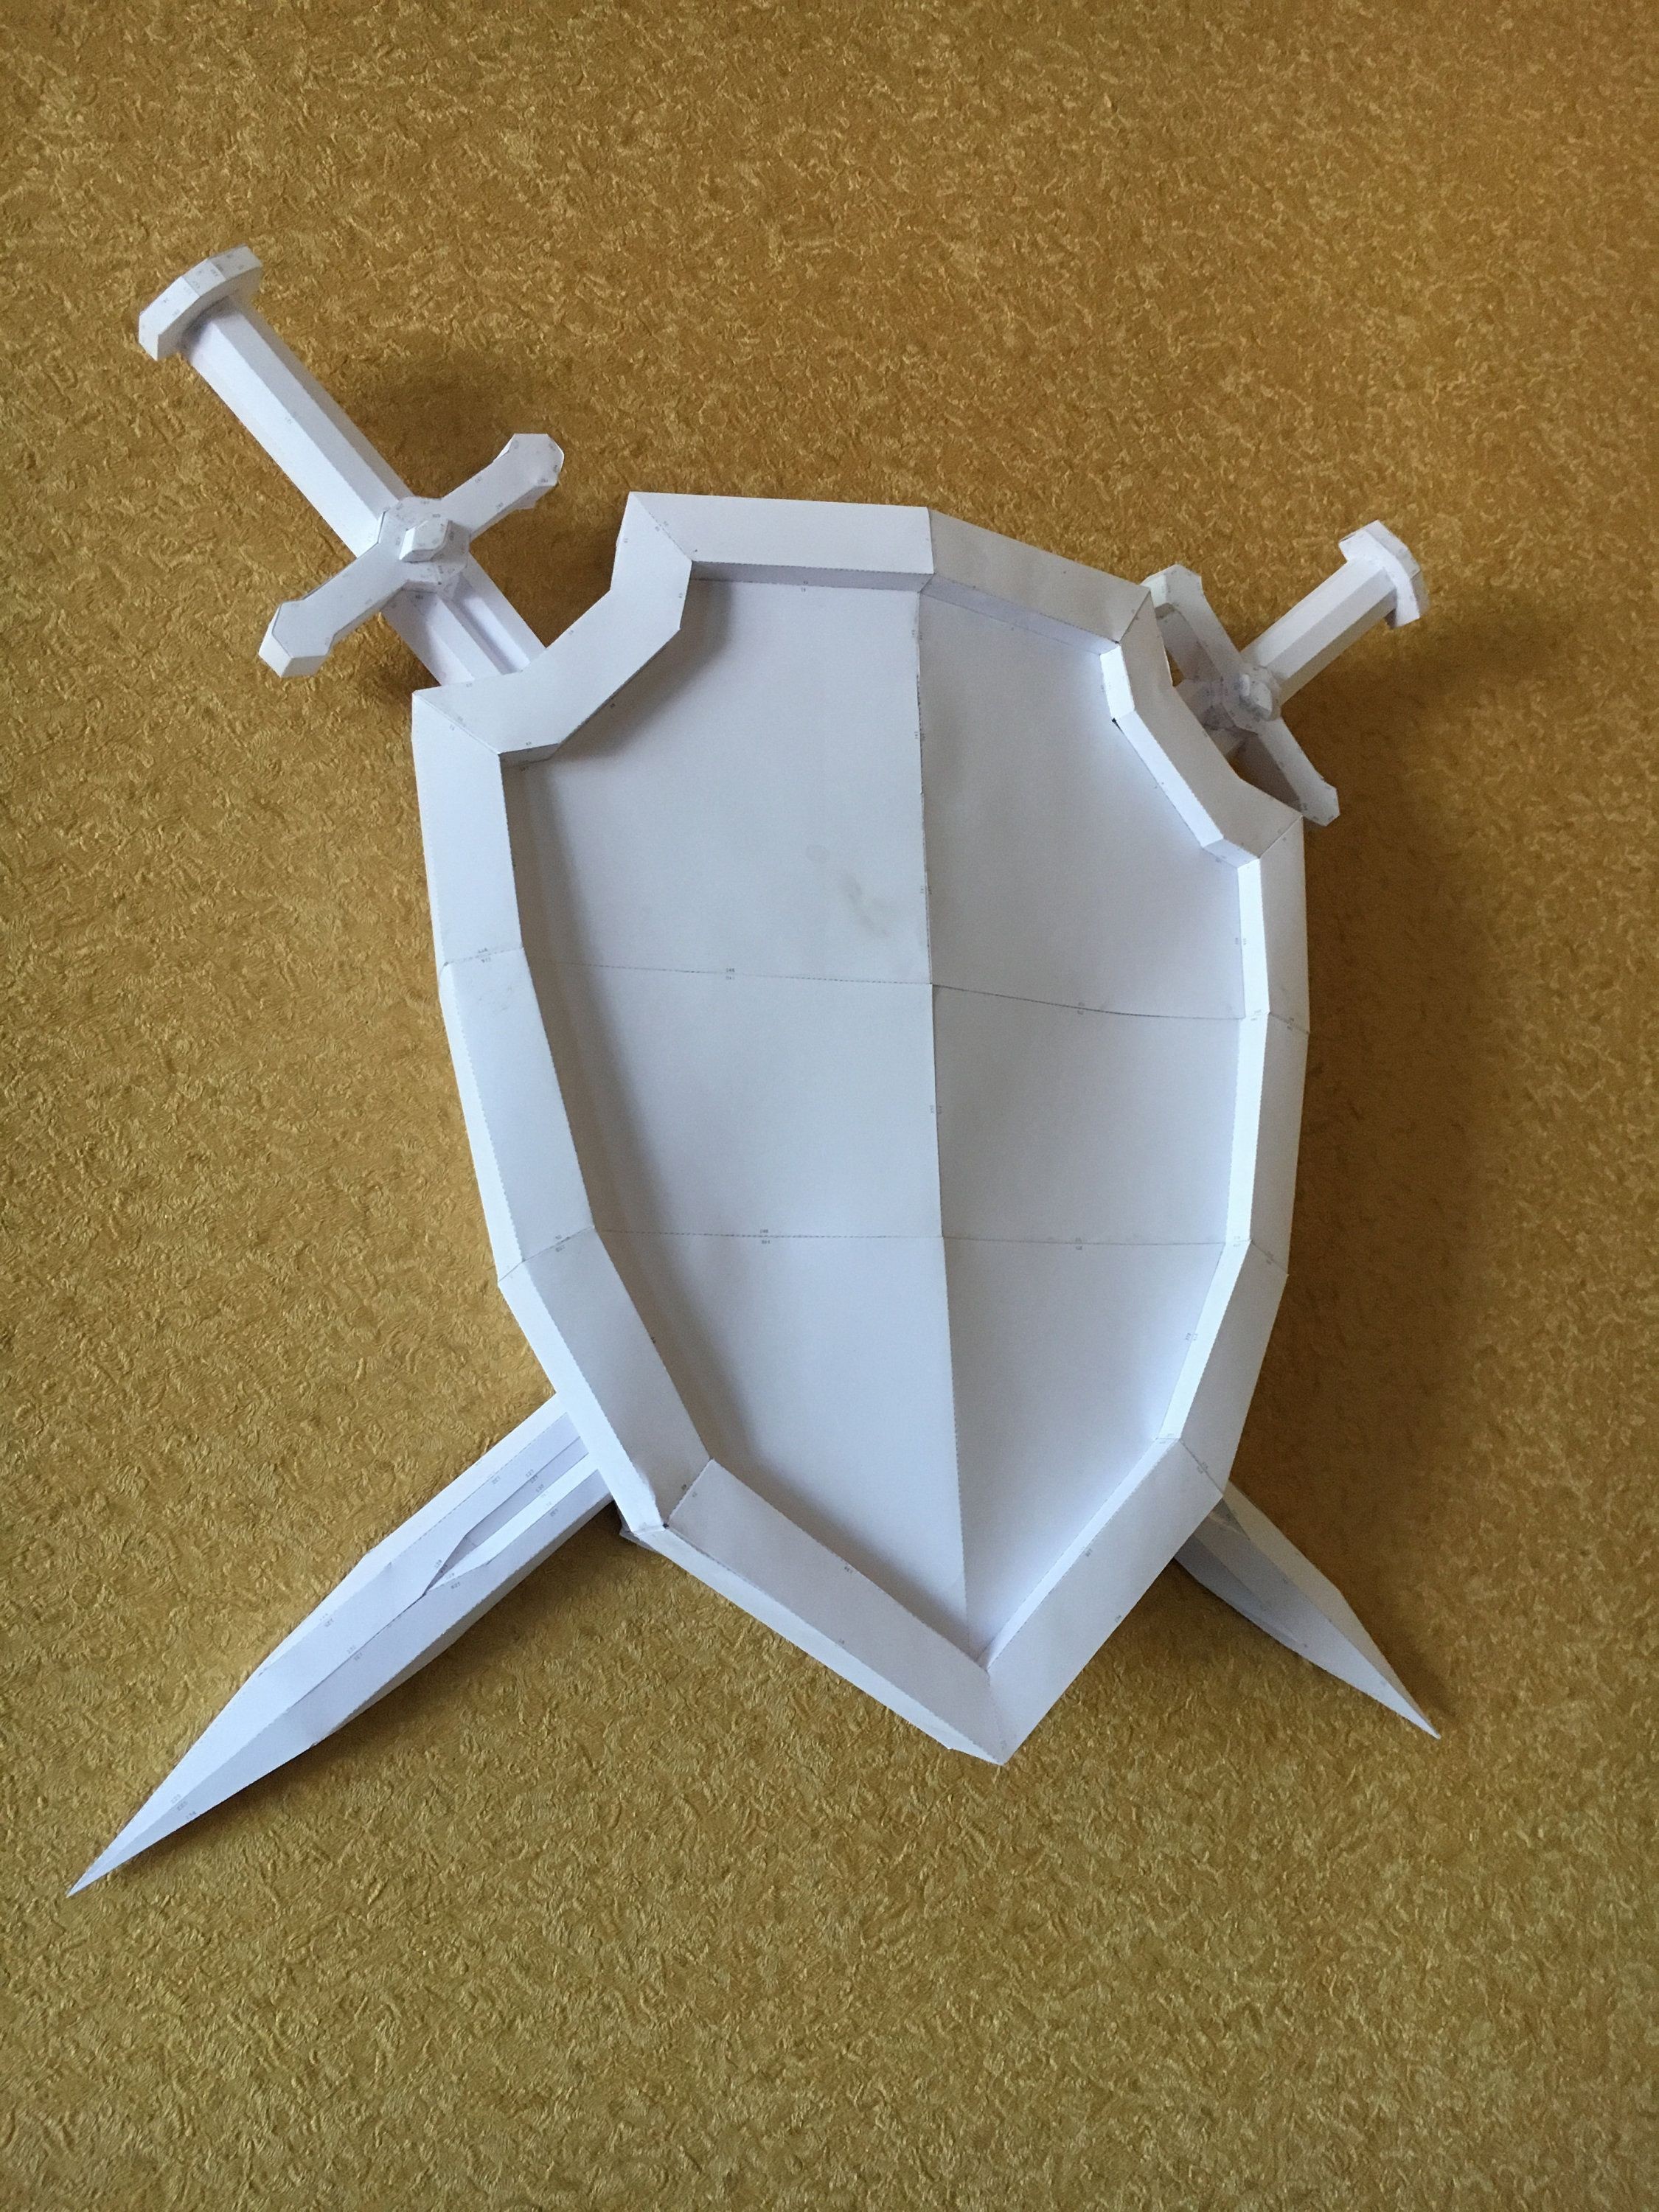 Monkey Papercraft Sword Shield Diy Papercraft Model ÐÑÐ¼Ð°Ð¶Ð½ÑÐµ Ð¸Ð·Ð´ÐµÐ Ð¸Ñ